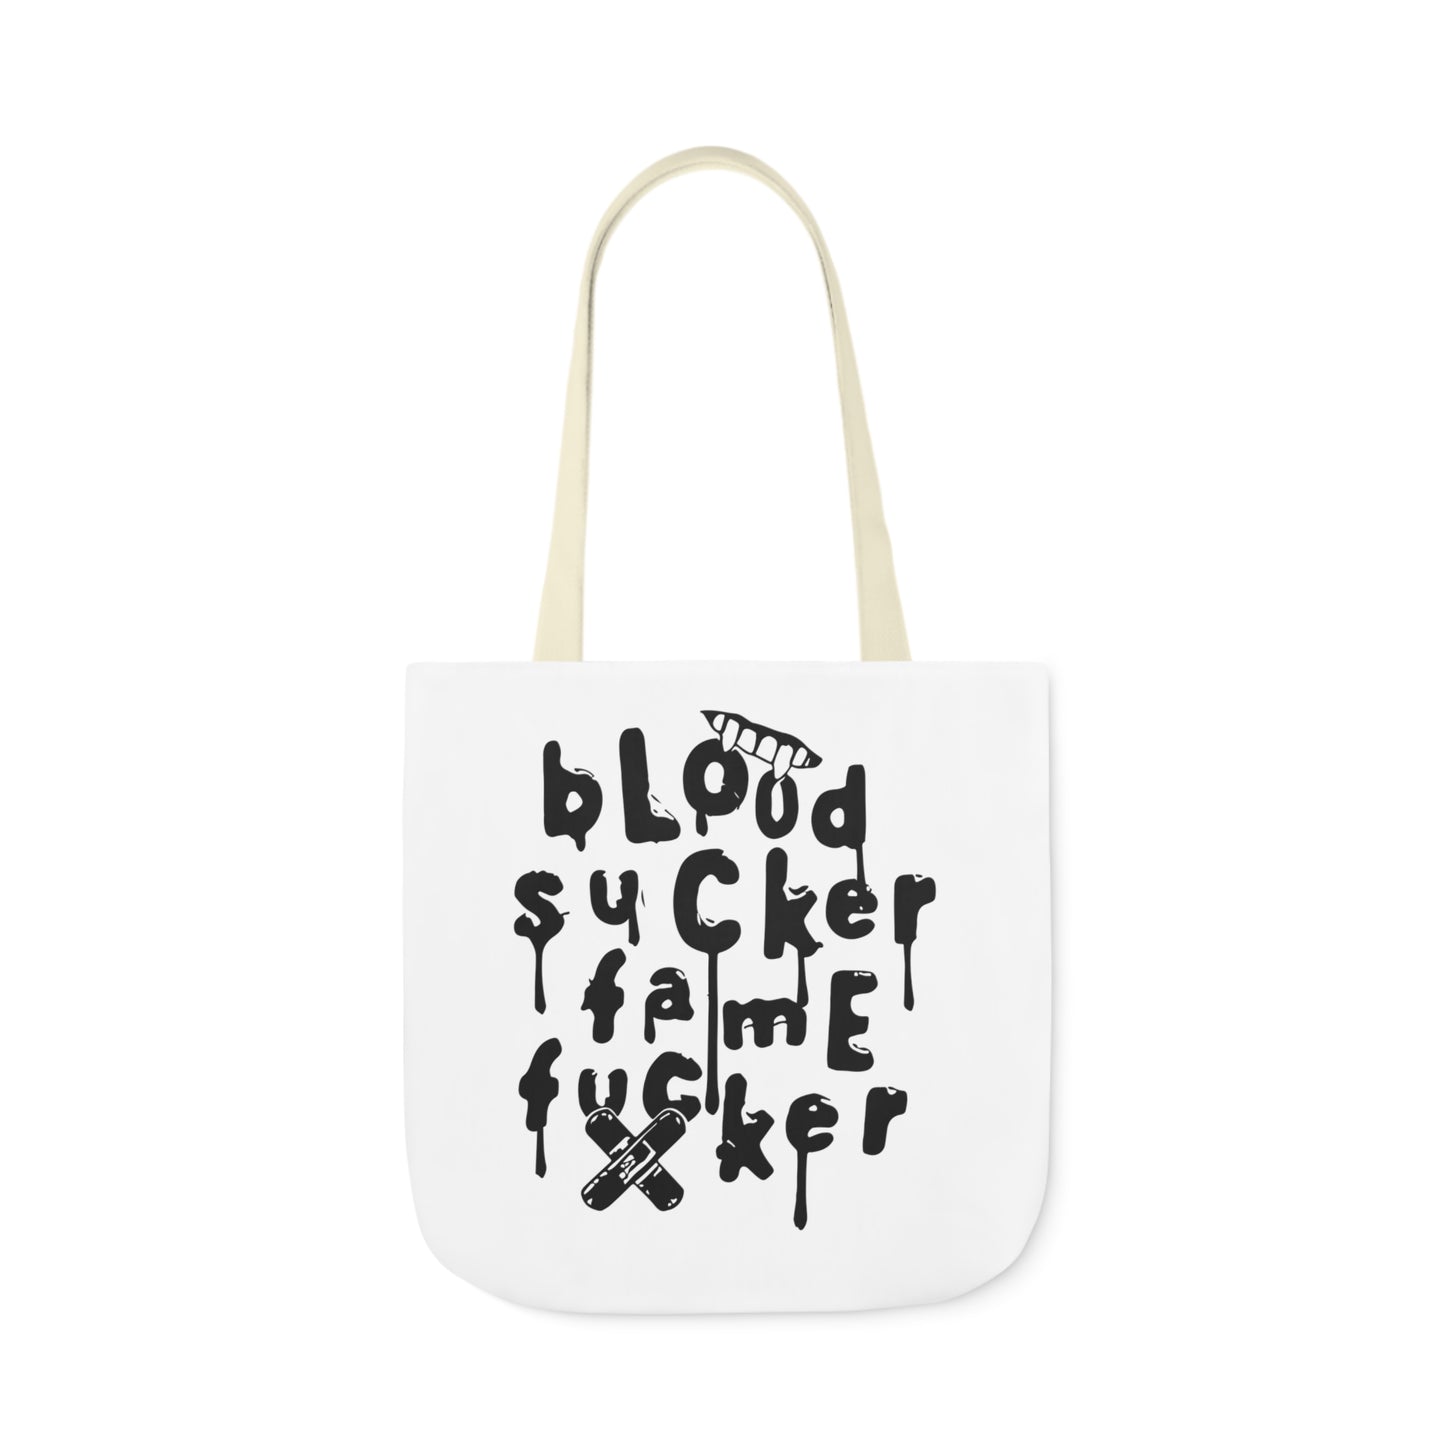 Olivia Rodrigo Blood Sucker Fame Fucker Polyester Canvas Tote Bag